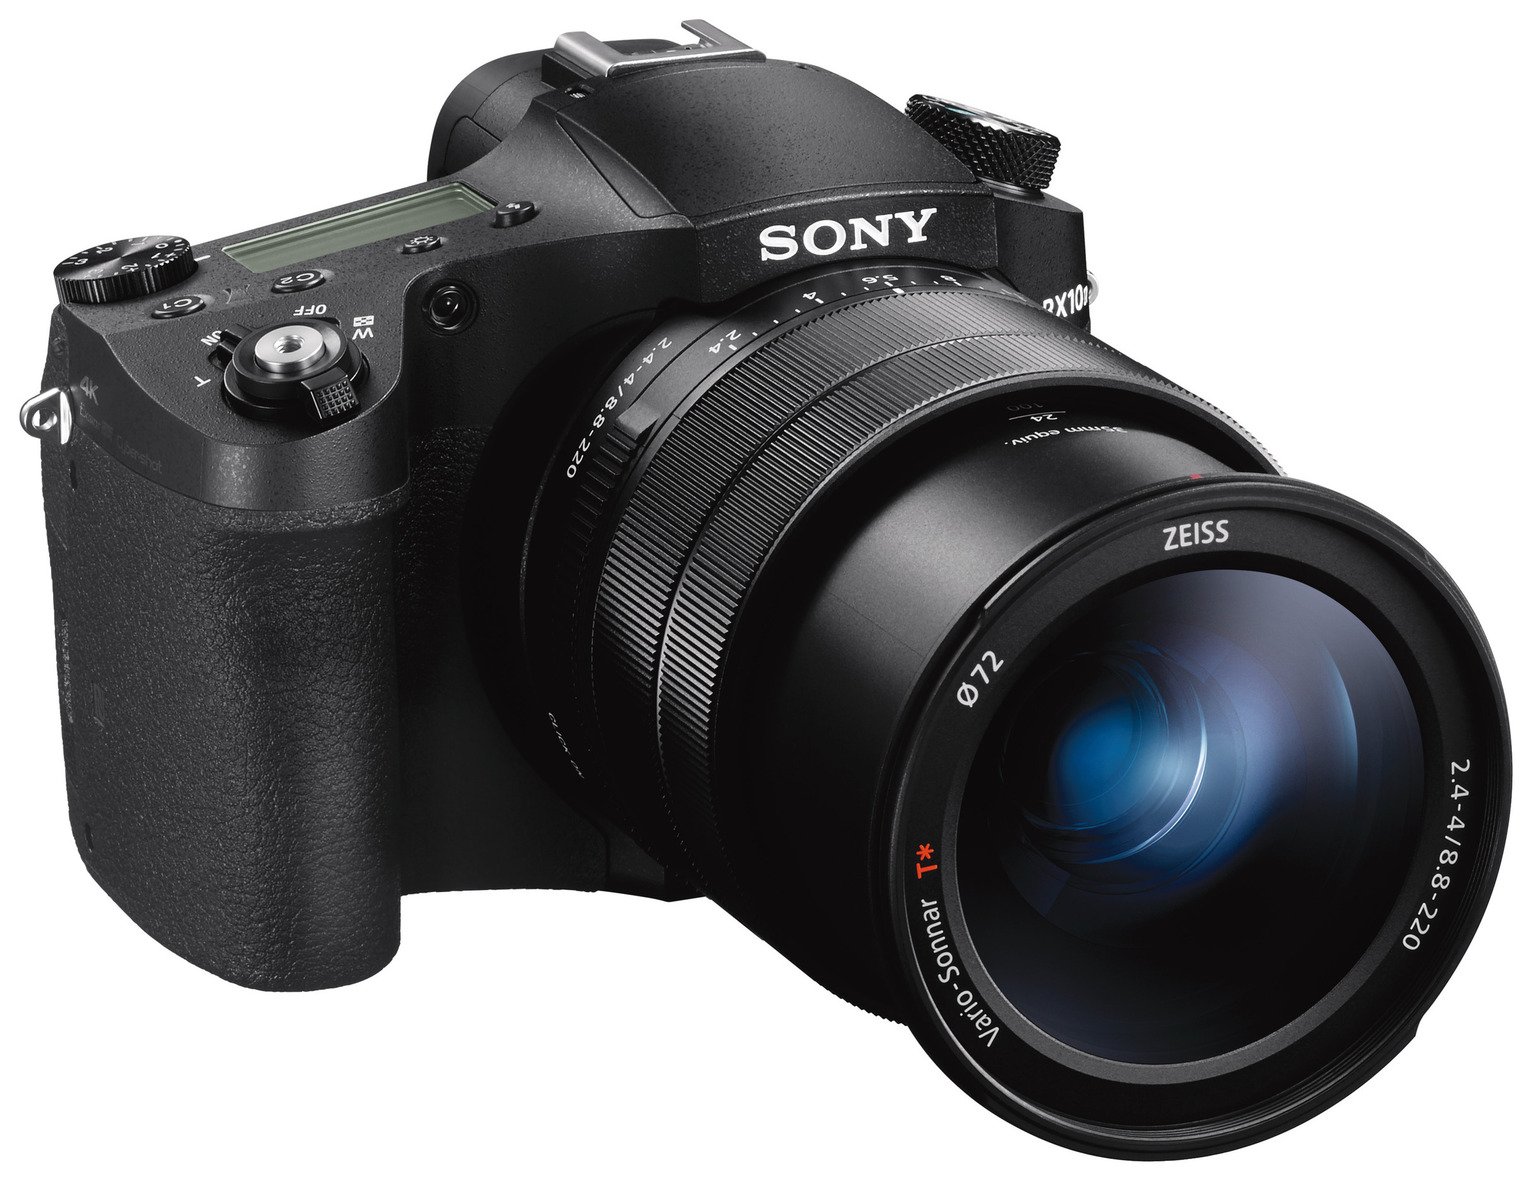 Sony DSC-RX10M4 Premium Bridge Camera Review